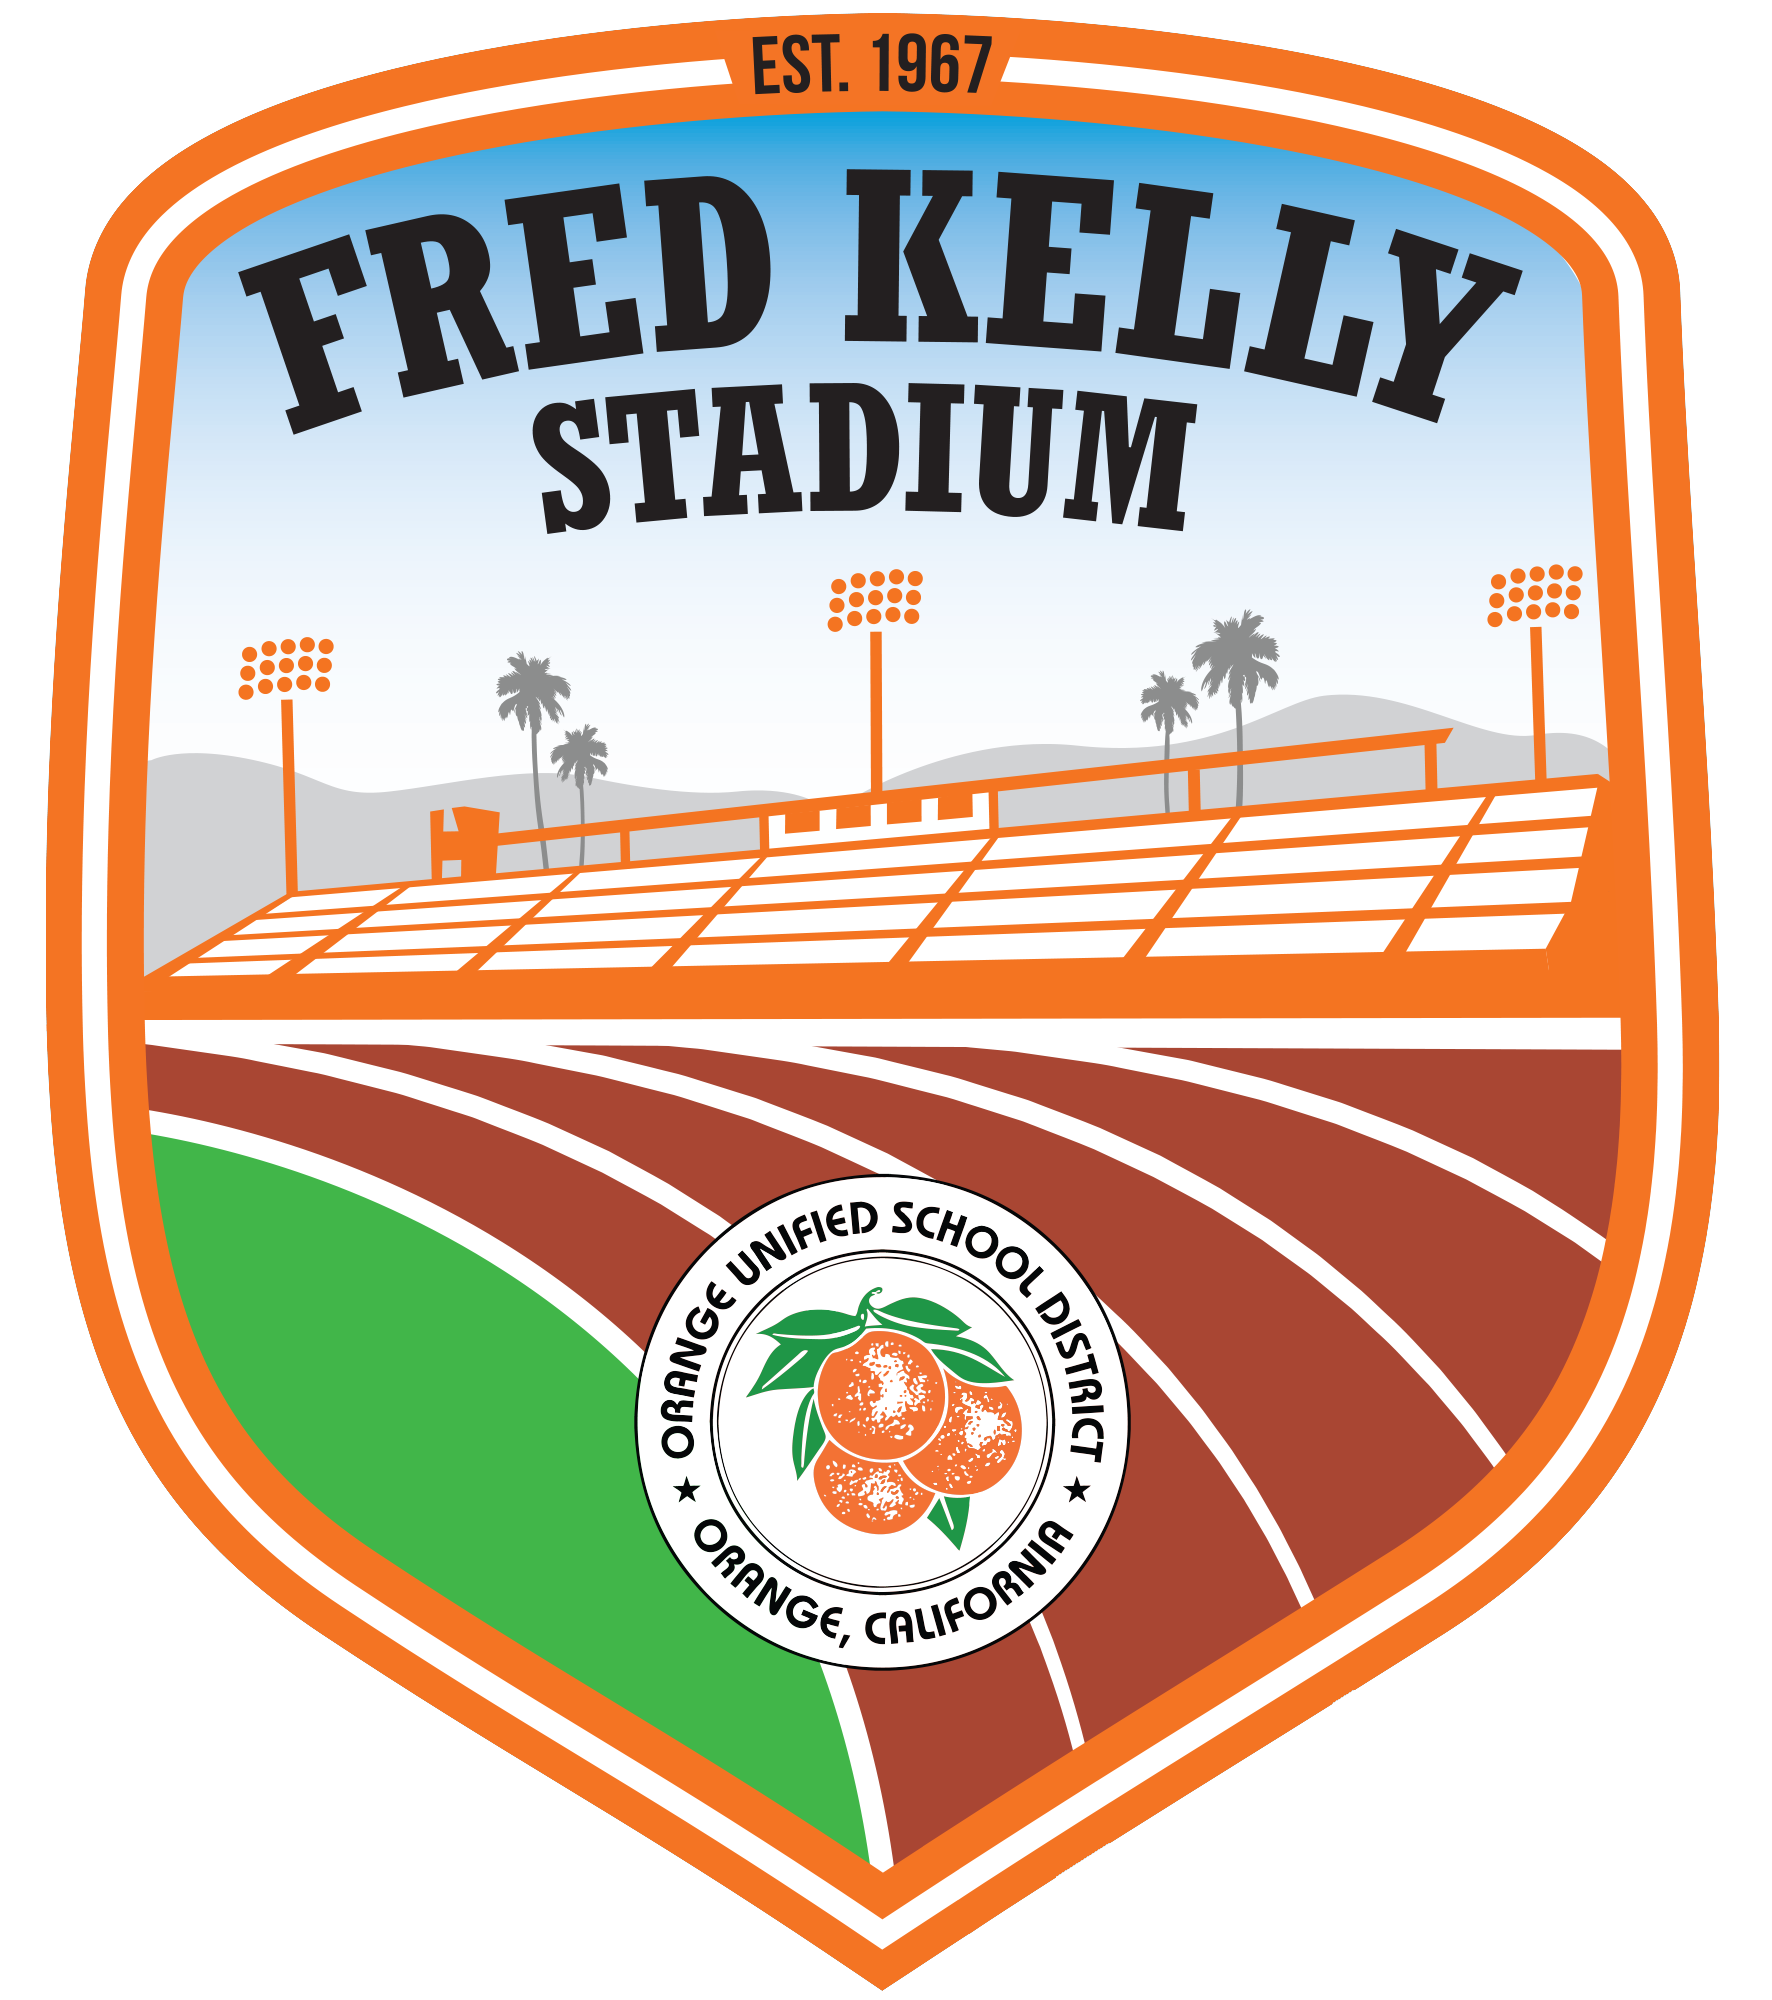 Fred Kelly Stadium